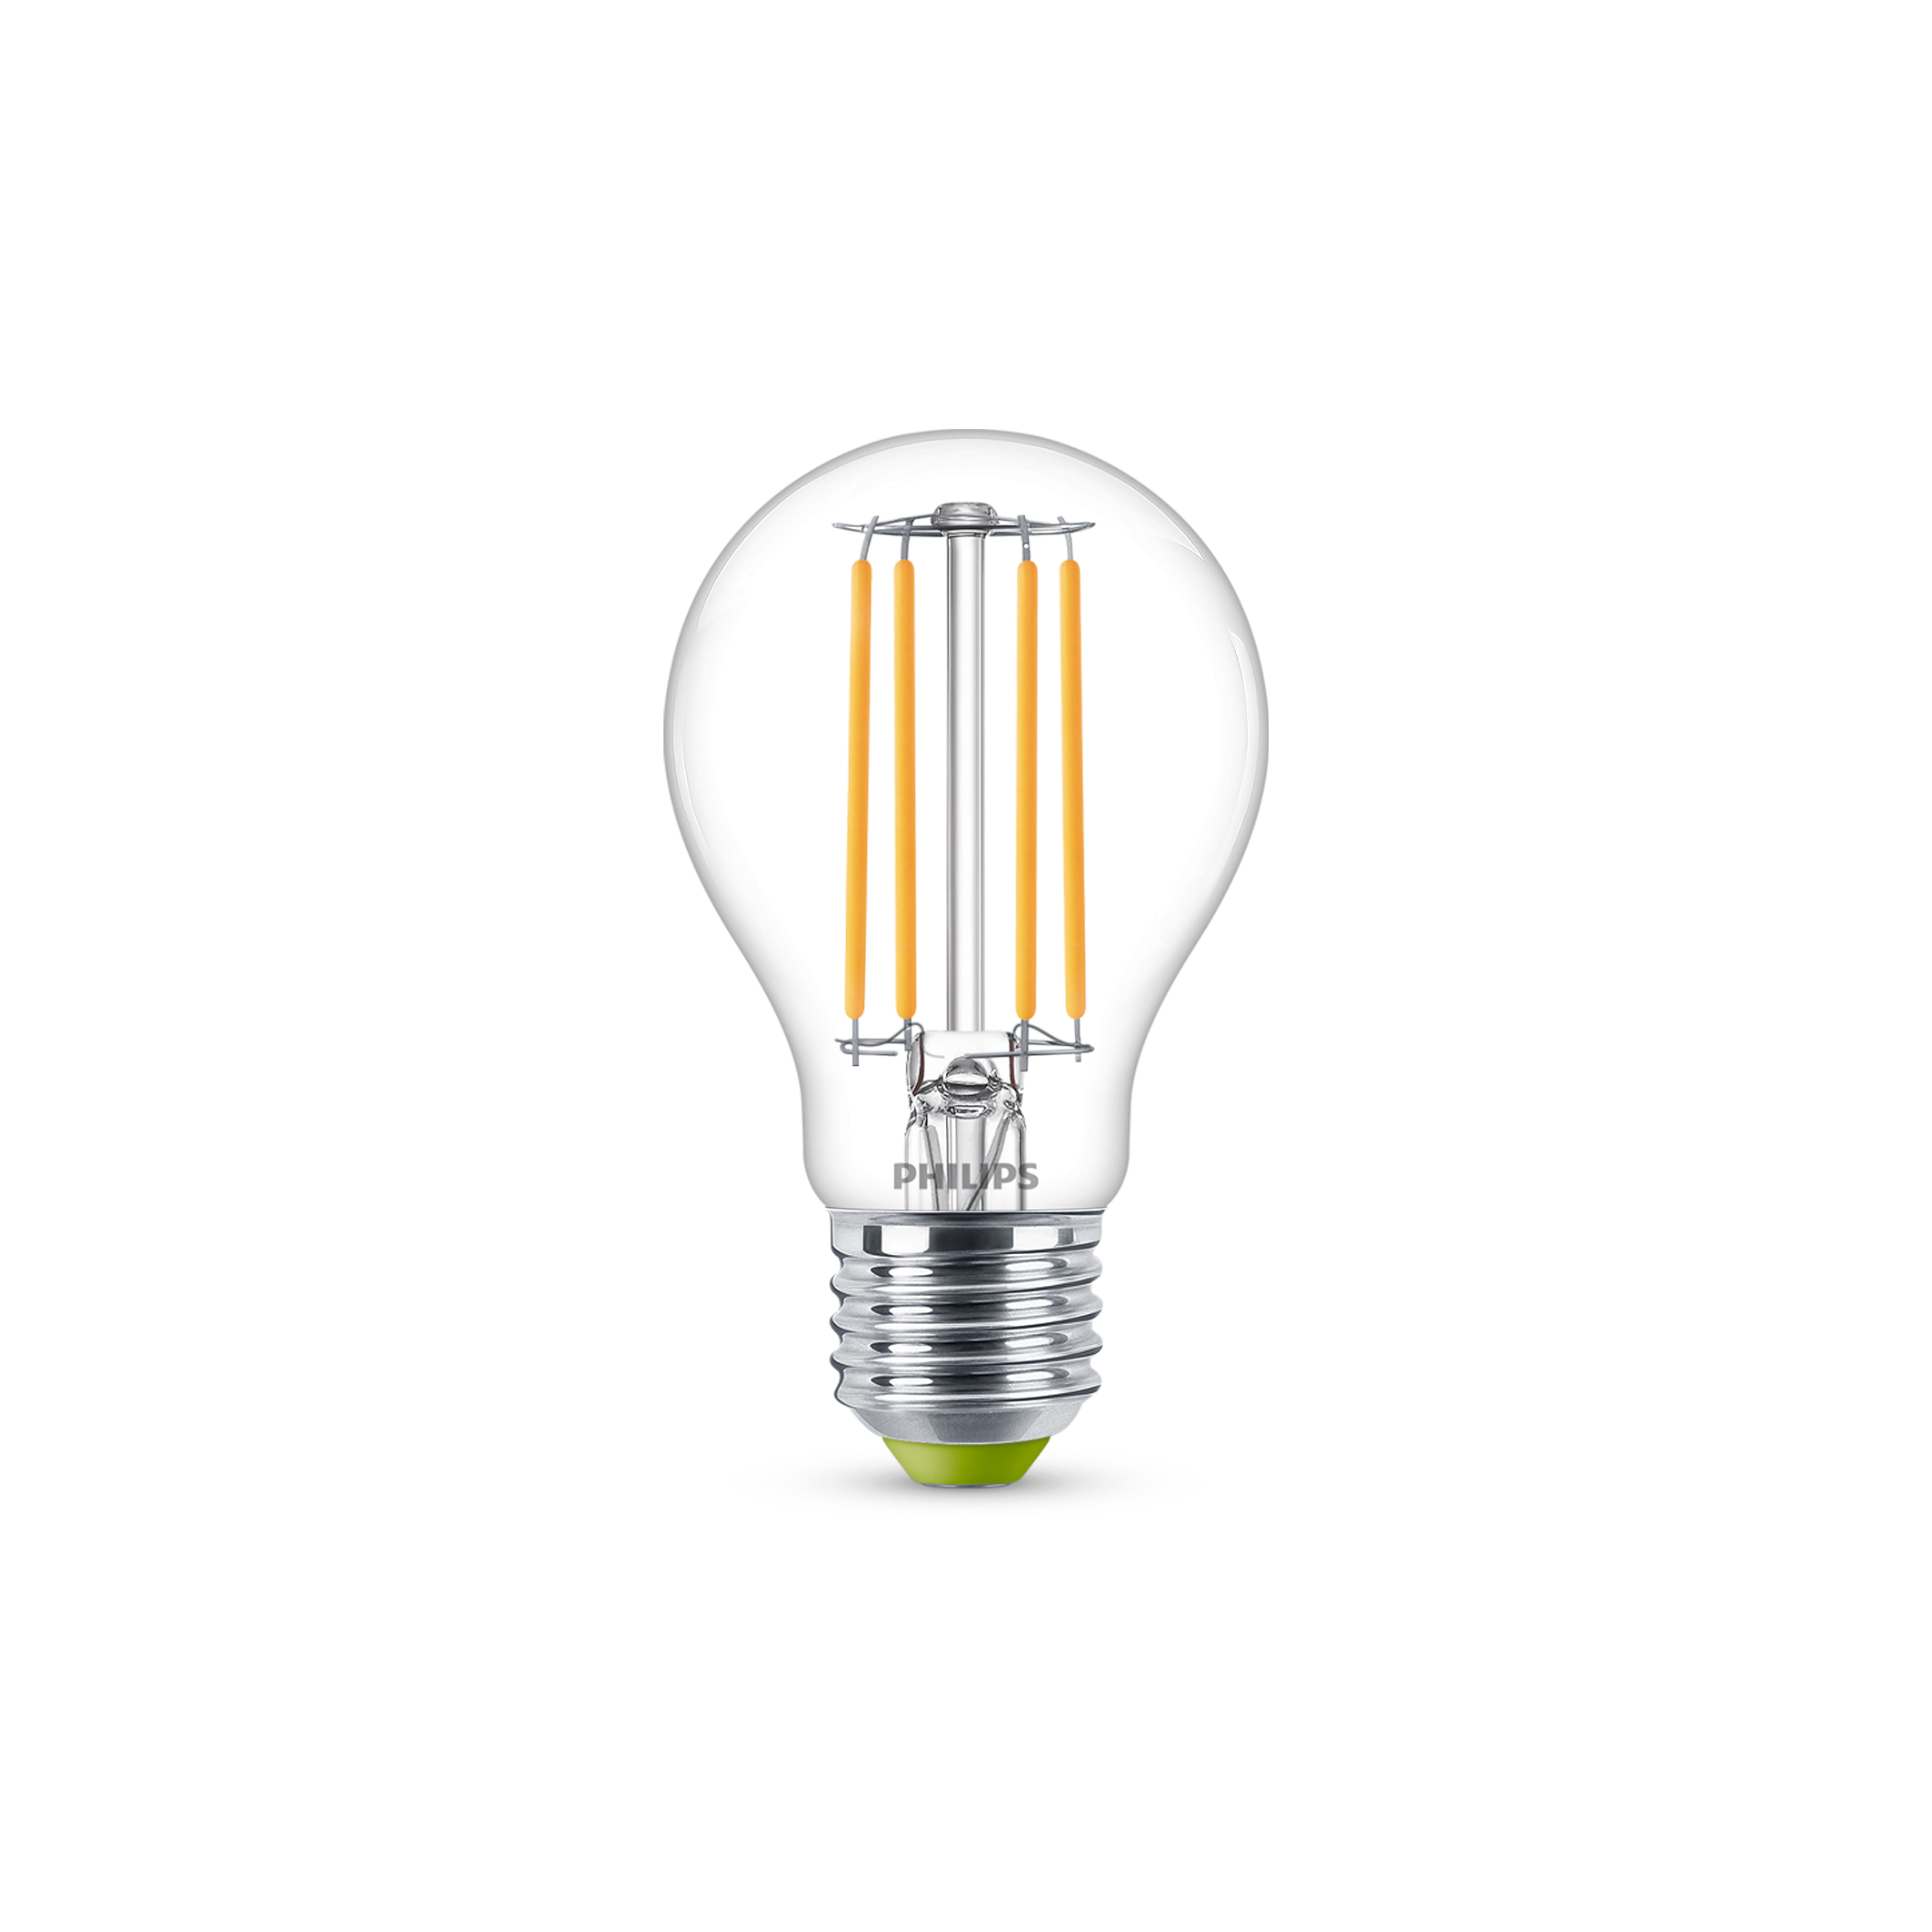 Ultraeffiziente LED-Lampe